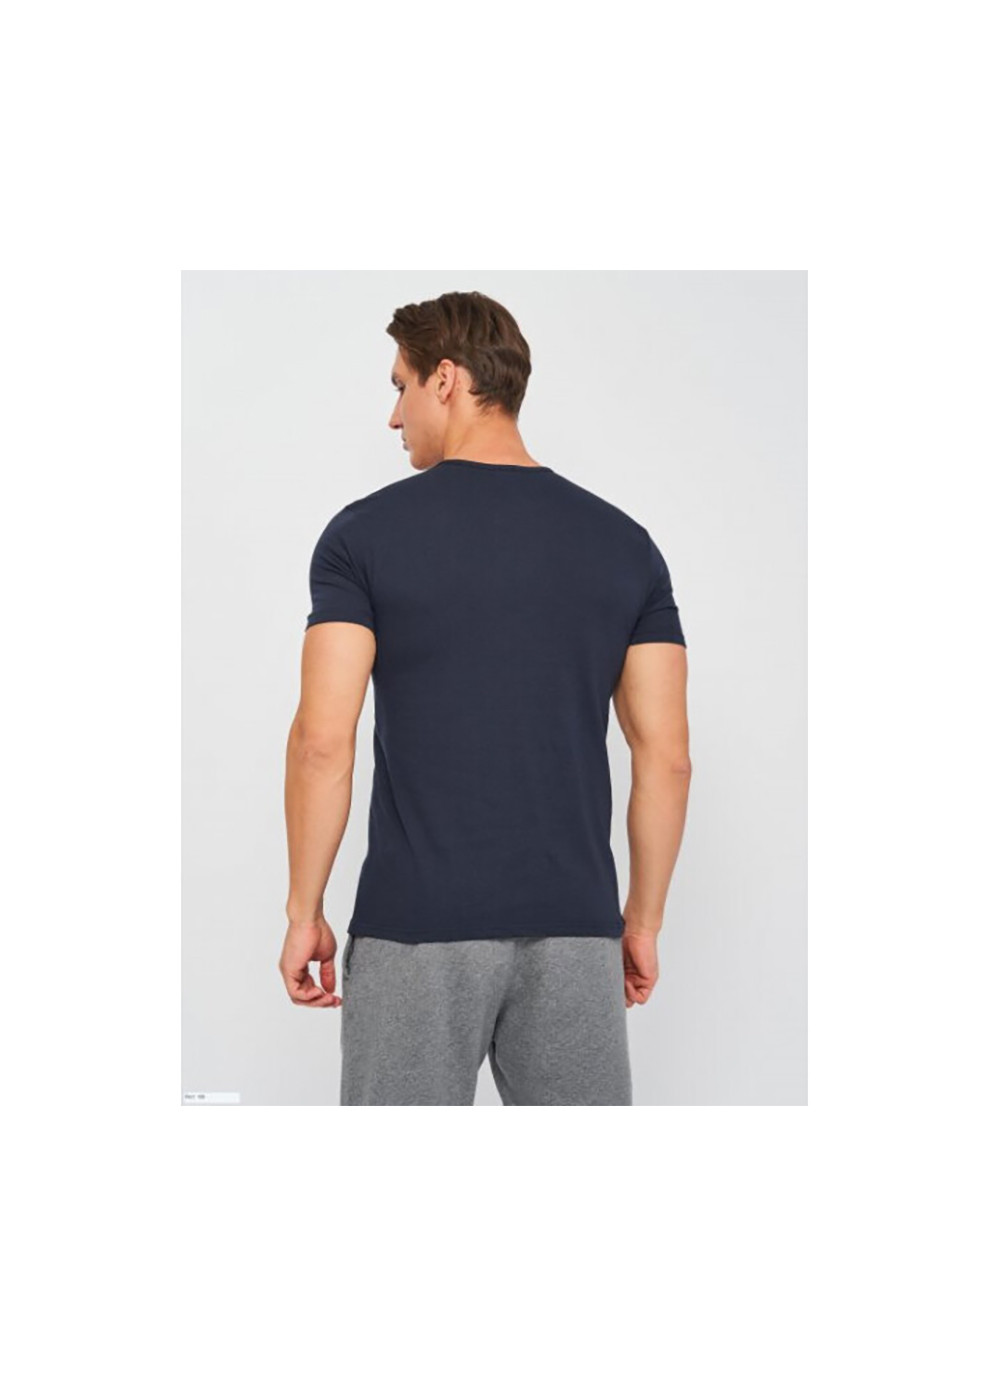 Темно-синяя футболка t-shirt mezza manica girocollo con stampa logo petto темно-синий m муж k1335 blunavy-m Kappa